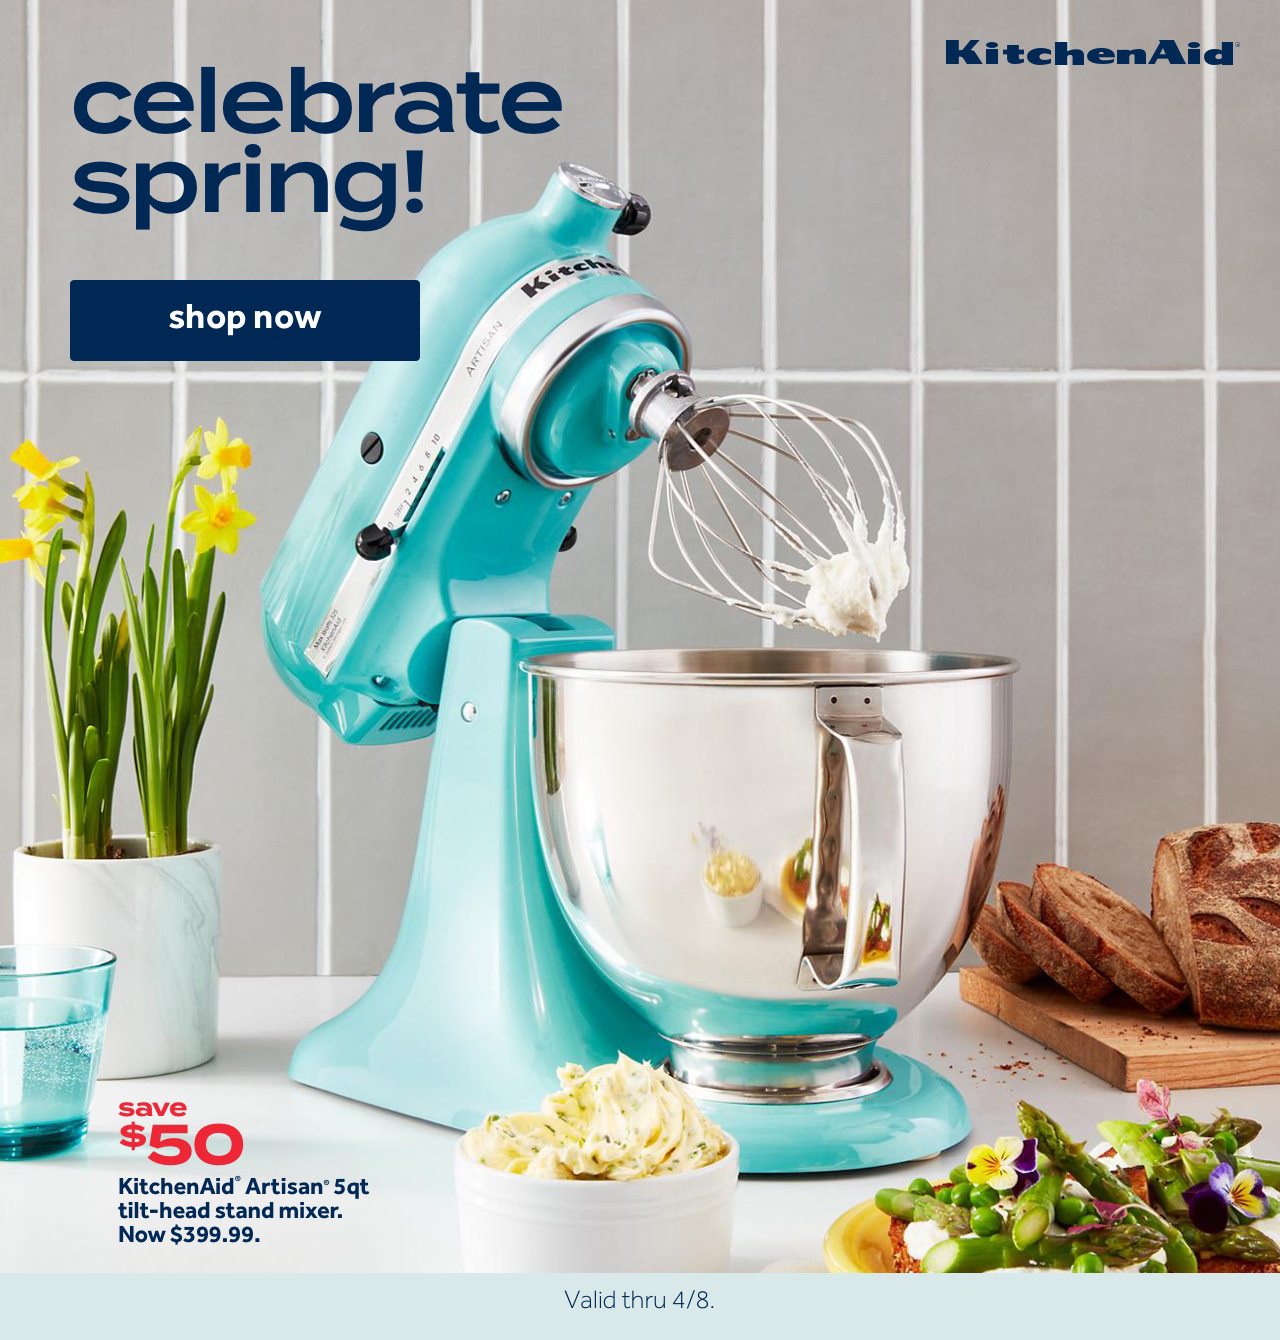 Celebrate Spring! | shop now | save $50 KitchenAid Artisan 5 qt tilt-head stand mixer. Now $399.99 | Valid thru 4/8